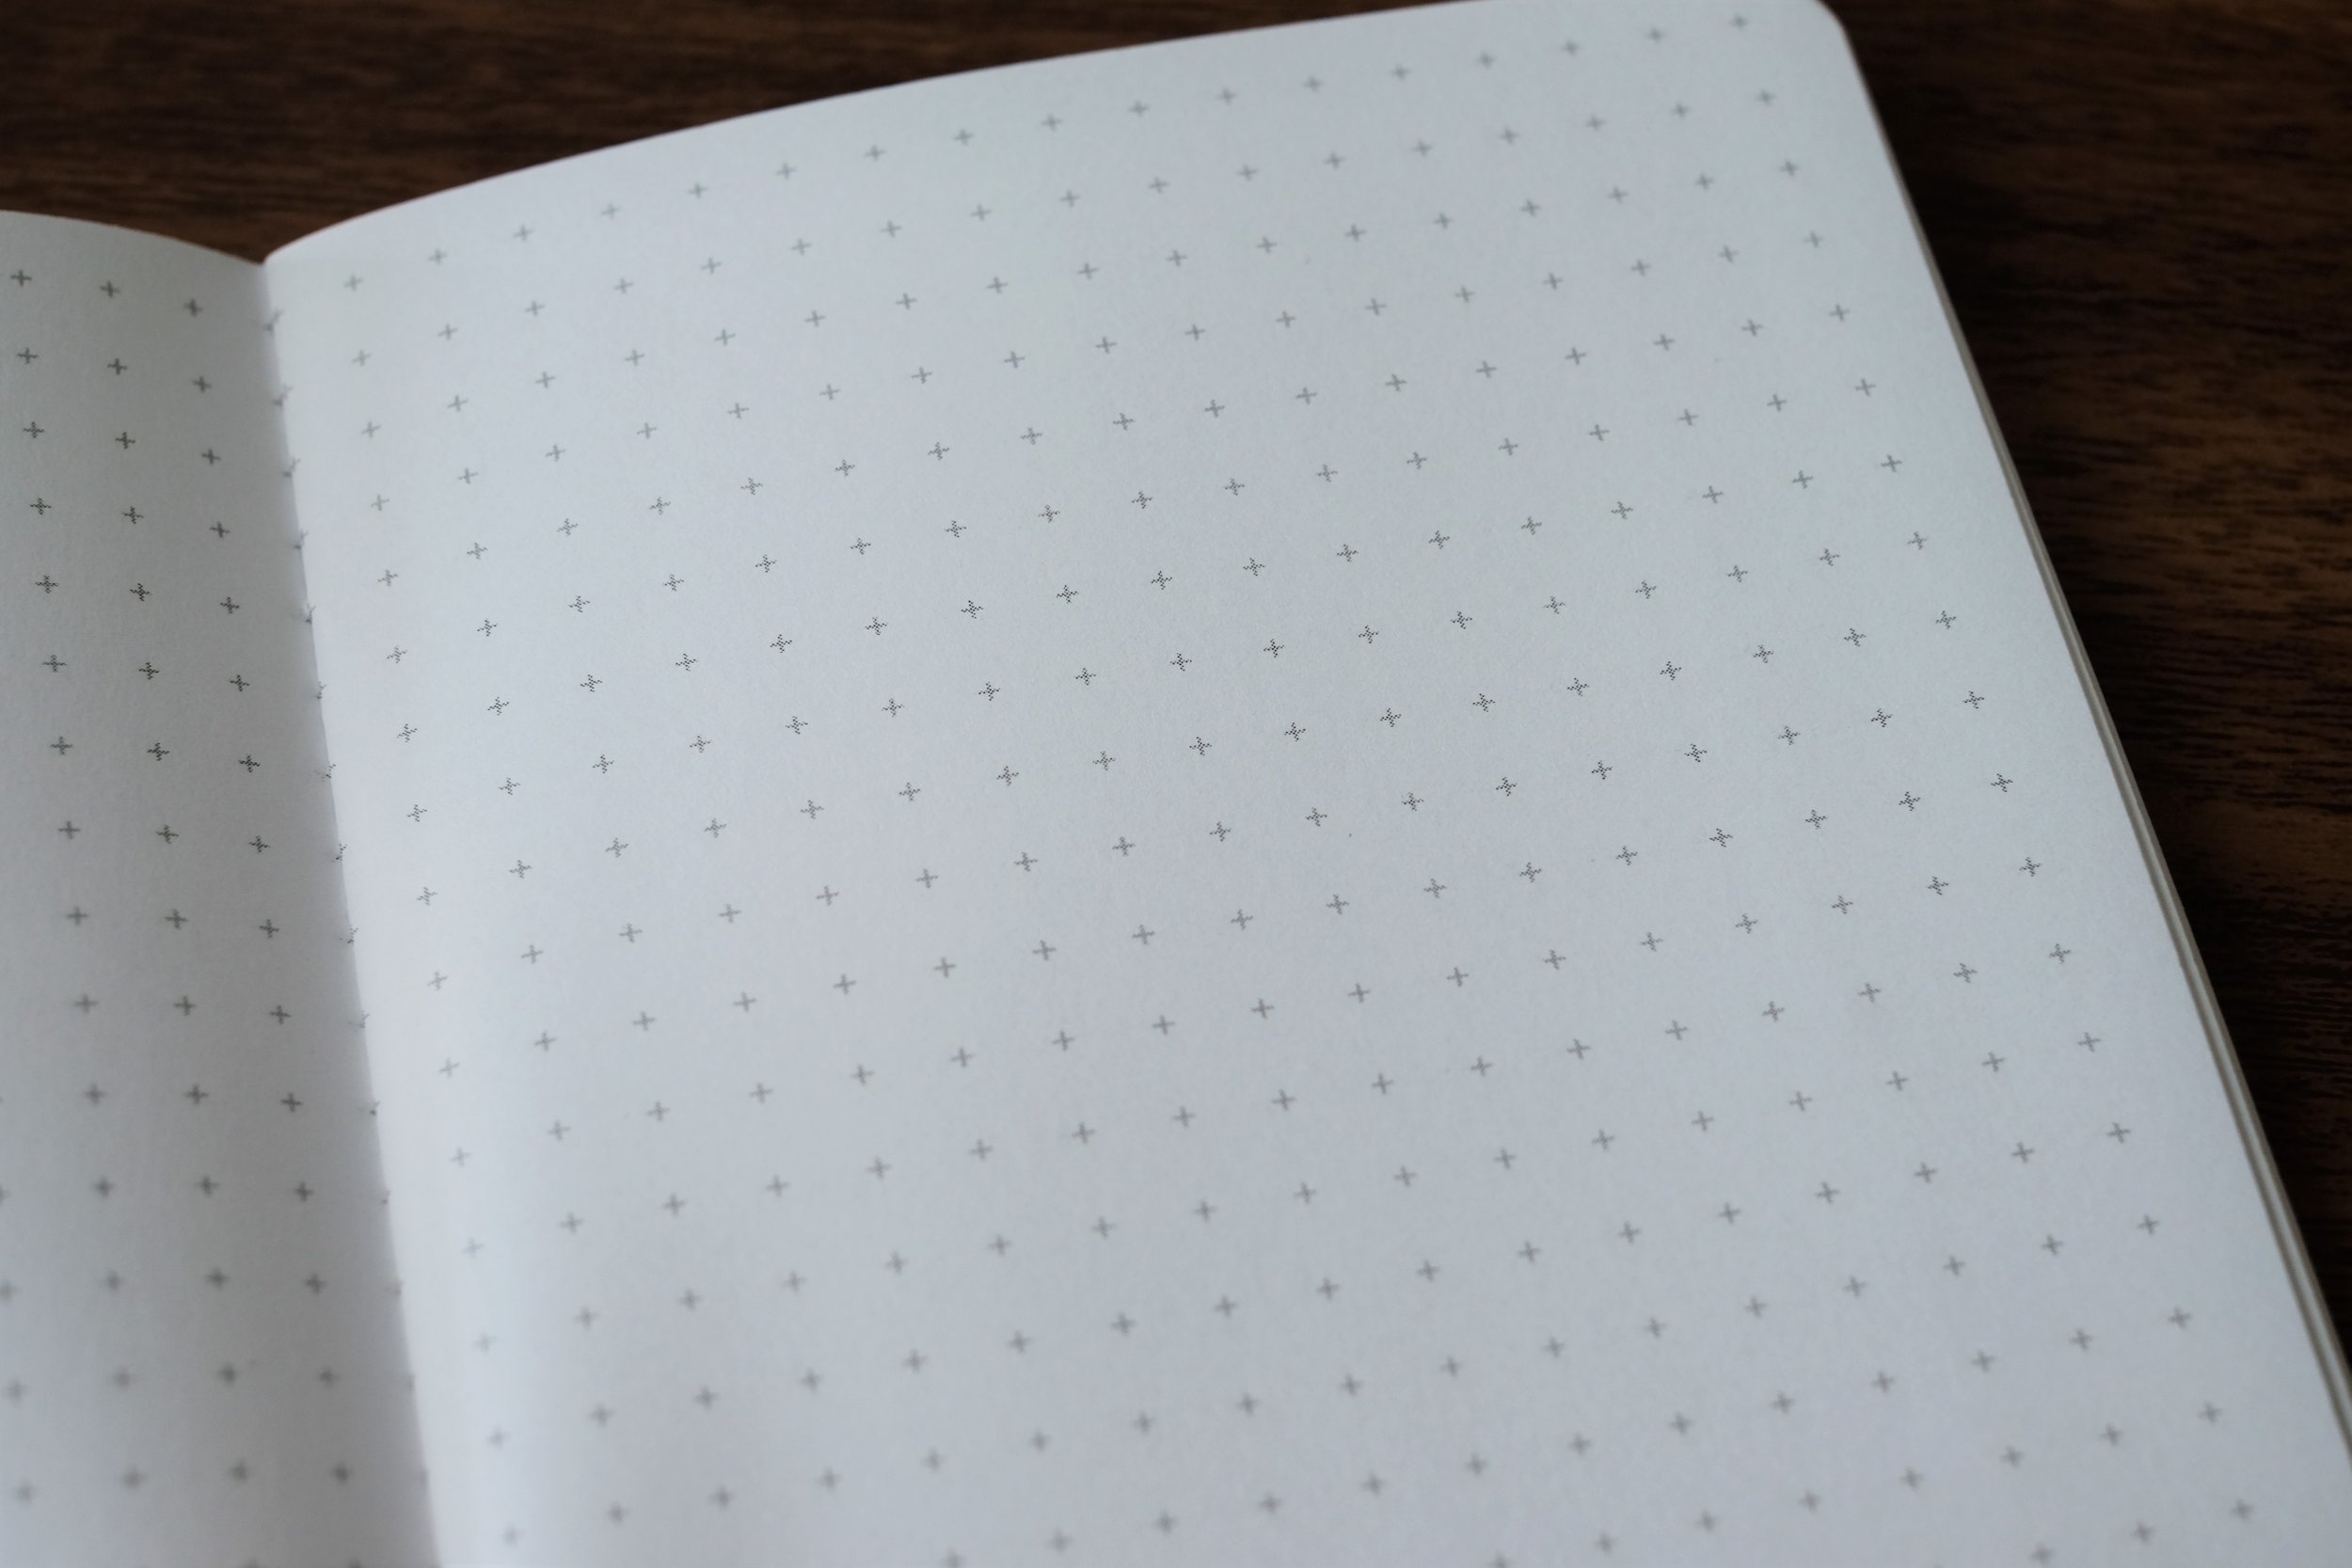 Honey Bee Travelers Notebook Insert - Midori Refill - Graph Paper